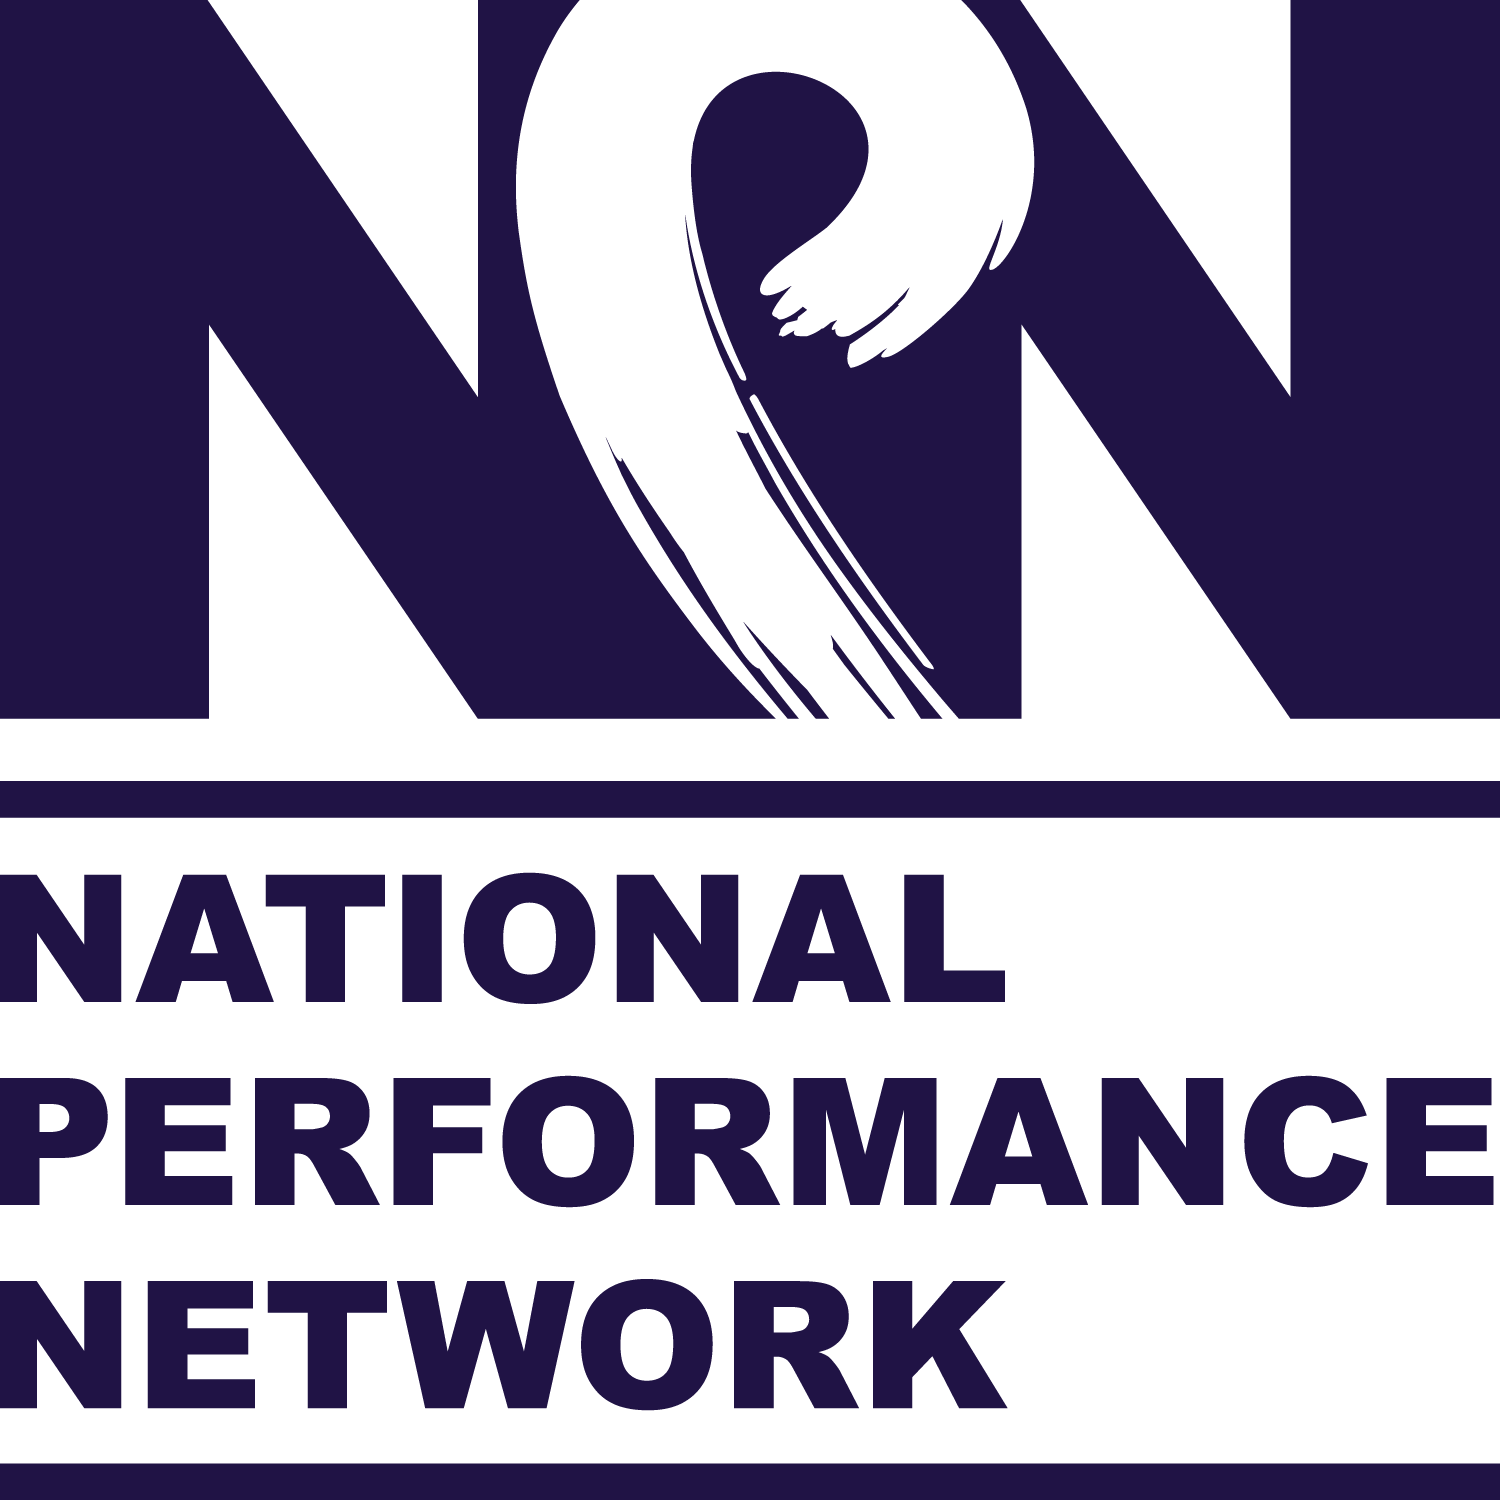 National Performance Network logo